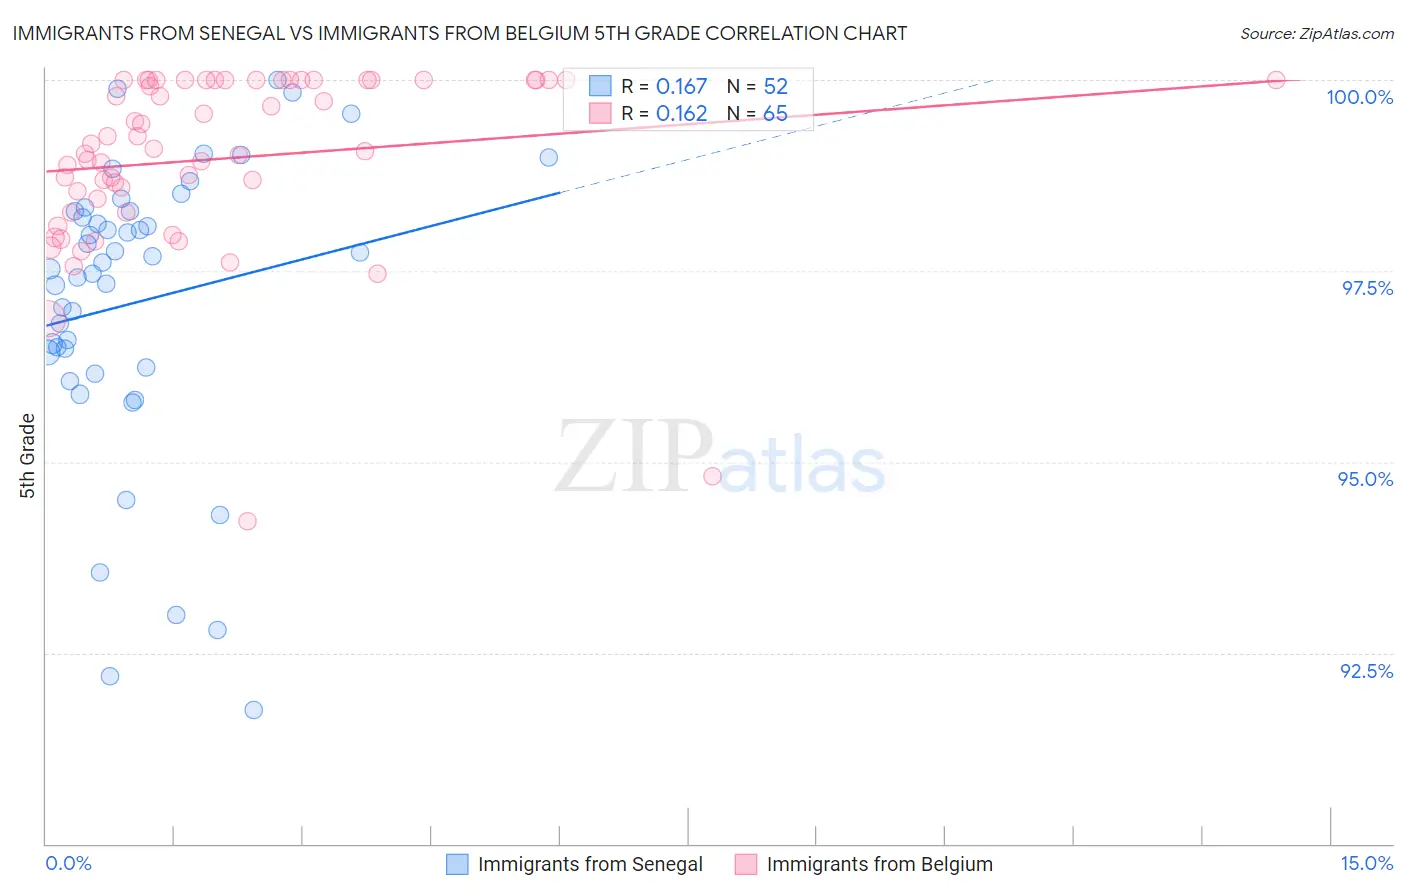 Immigrants from Senegal vs Immigrants from Belgium 5th Grade